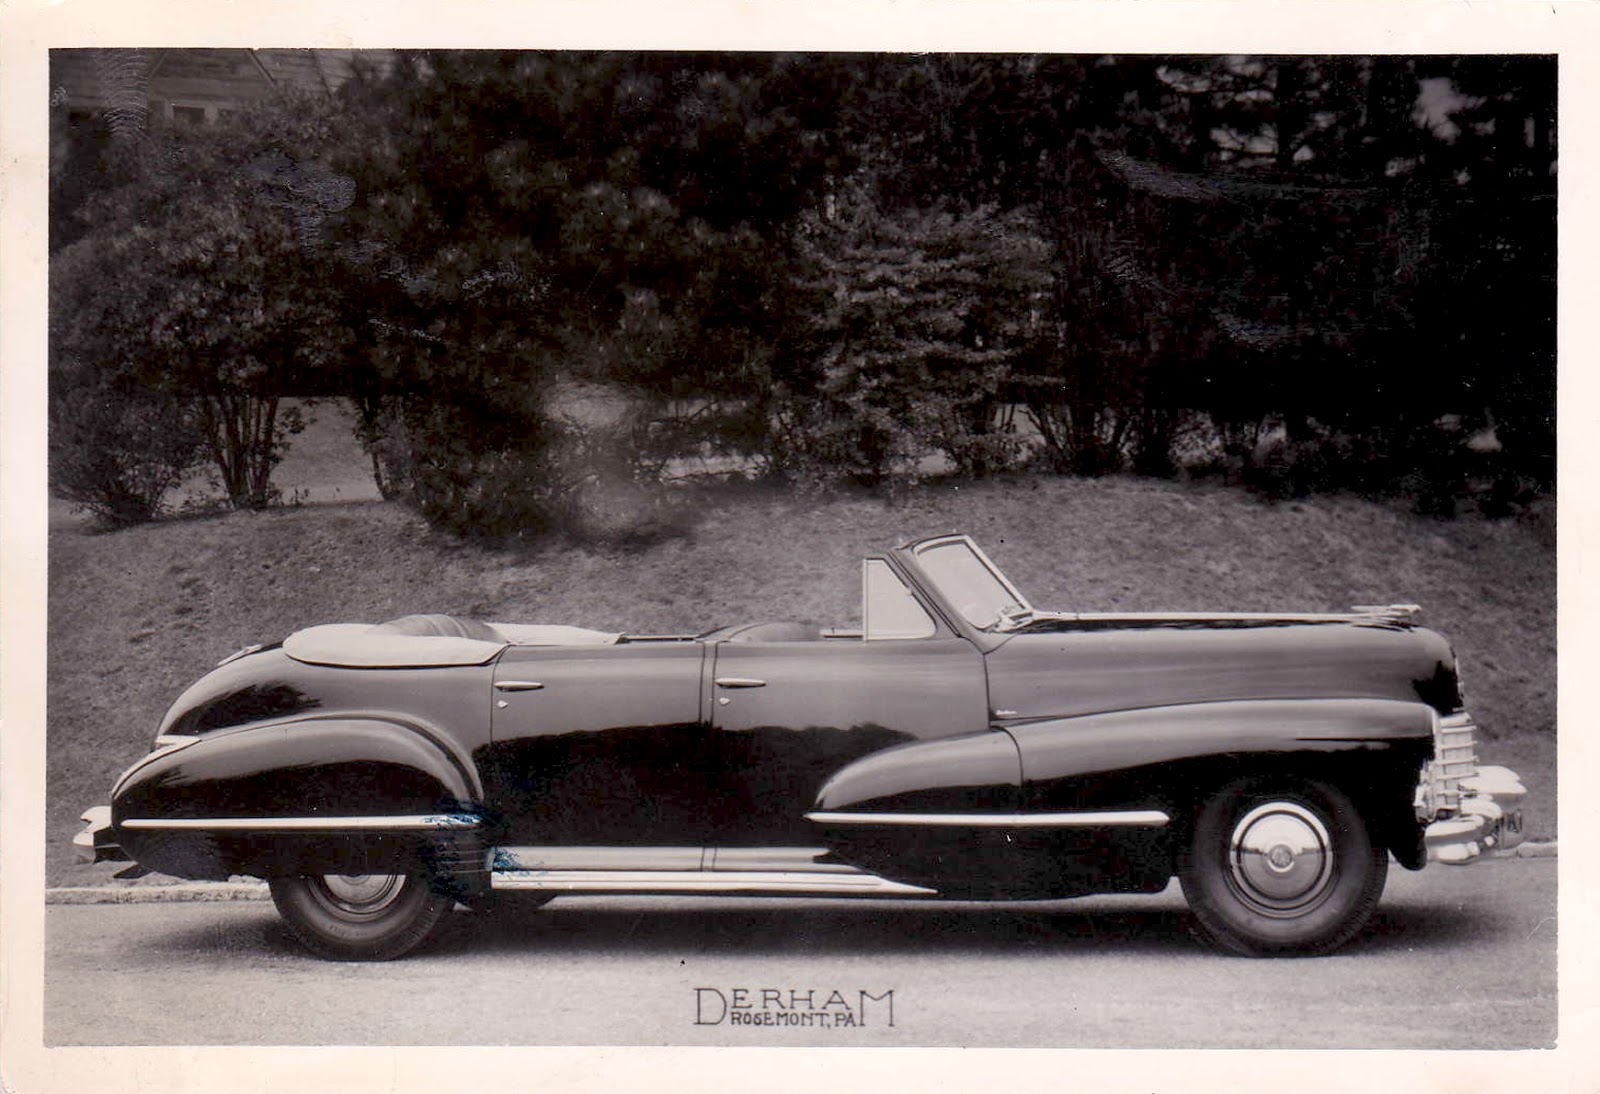 Vintage Motoring Blog: Derham bodied Packard, Pierce and Cadillac